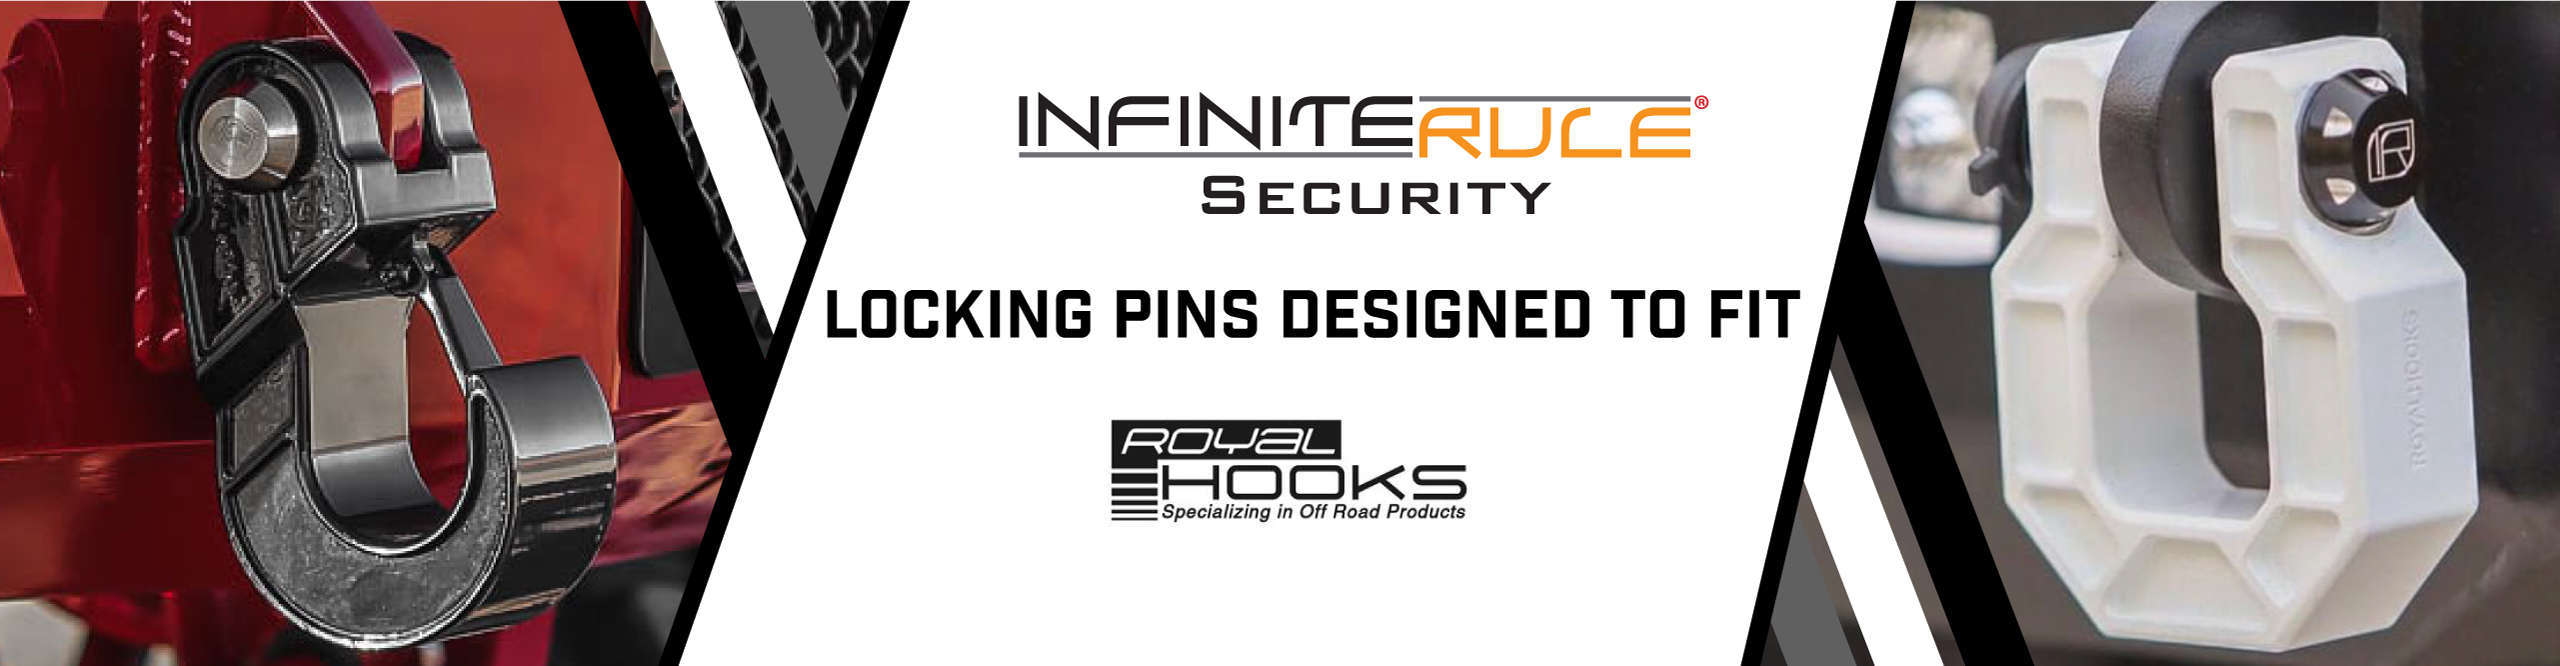 SS Locking Pin - 3 PACK - Keyed Alike (Infiniterule) for Royal Hooks a